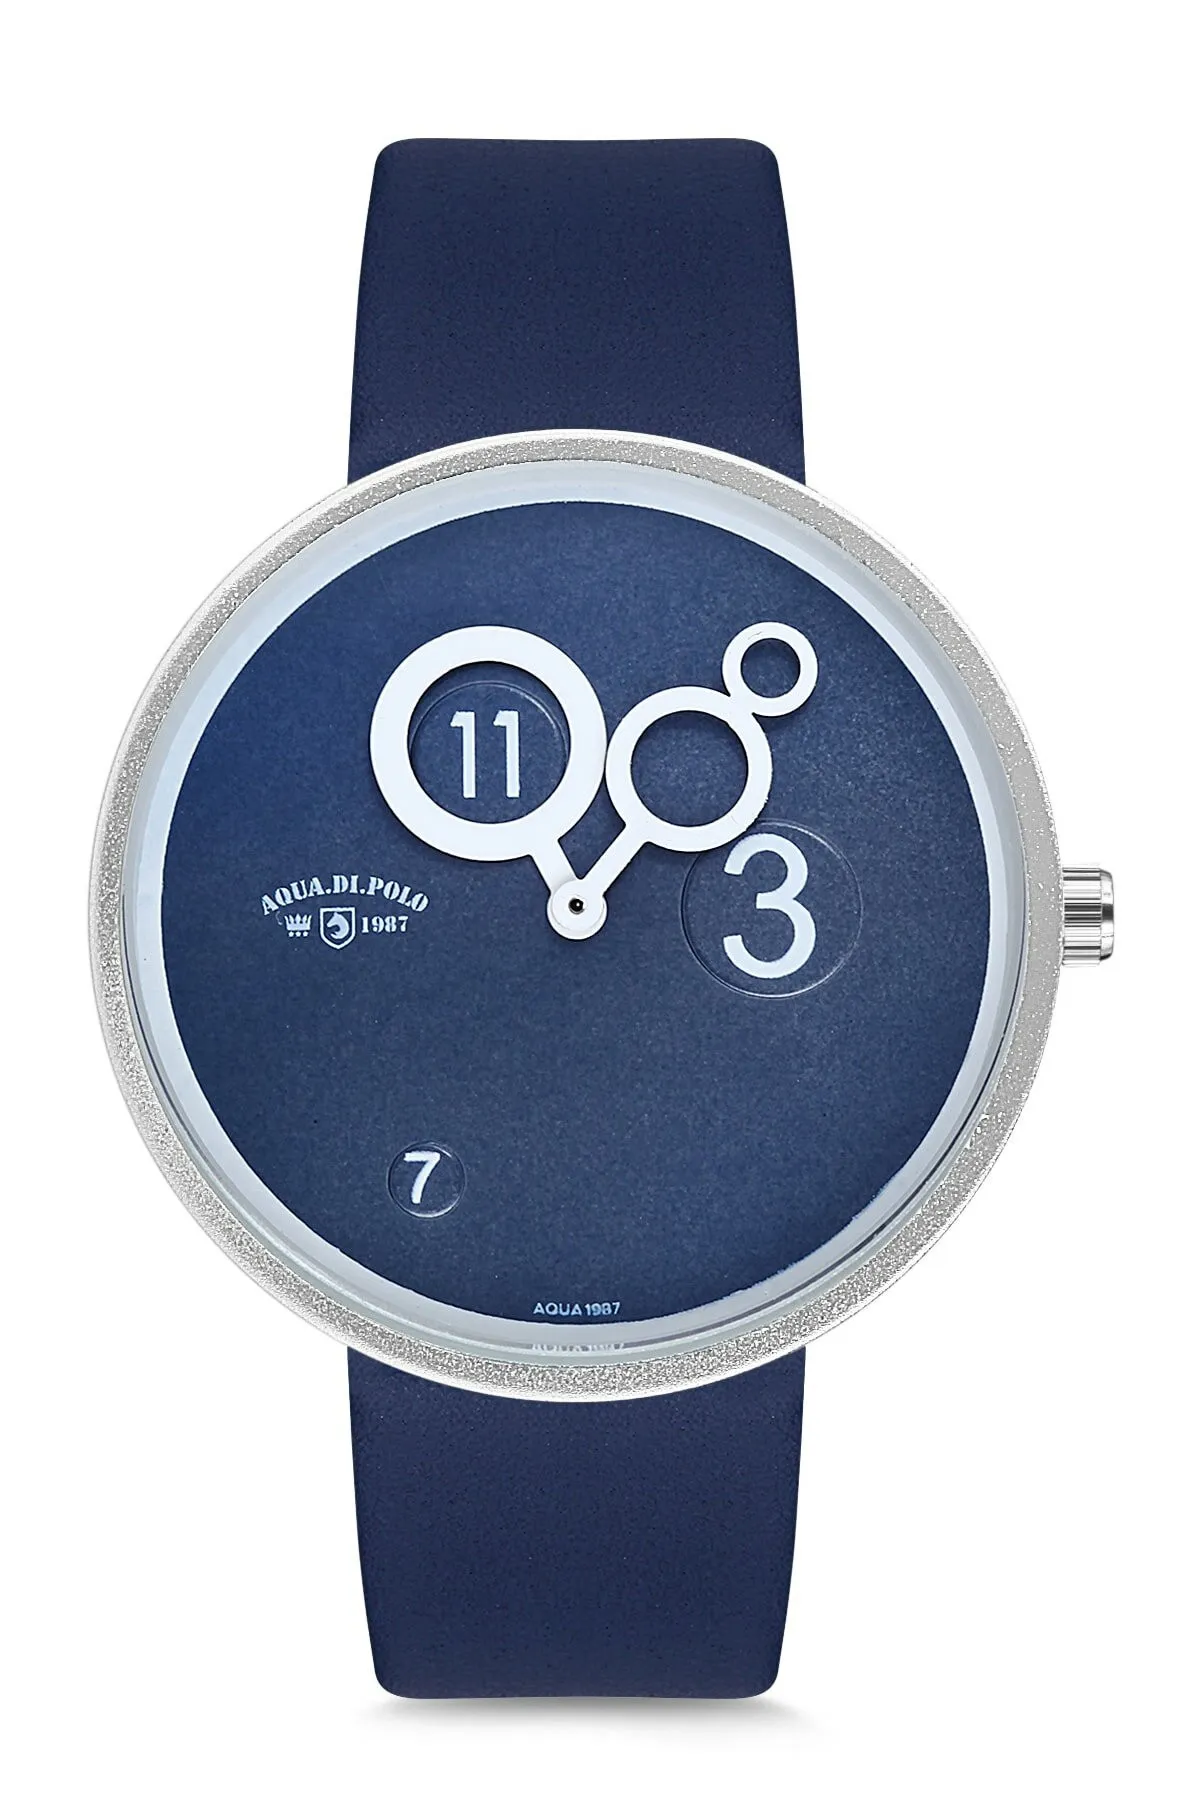 Кожаные наручные часы унисекс Di Polo apwa028501#1